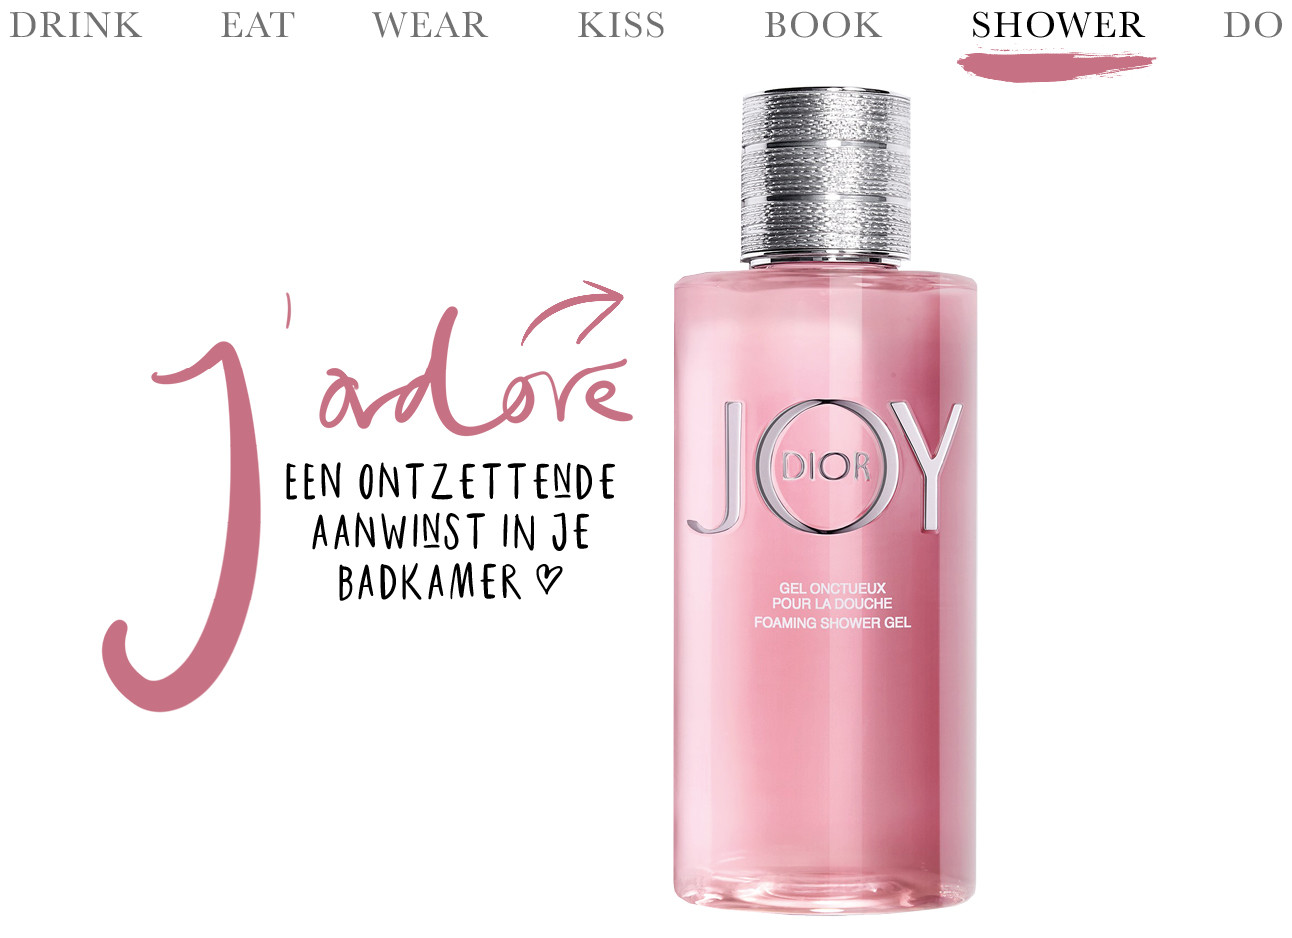 Joy showergel van Dior